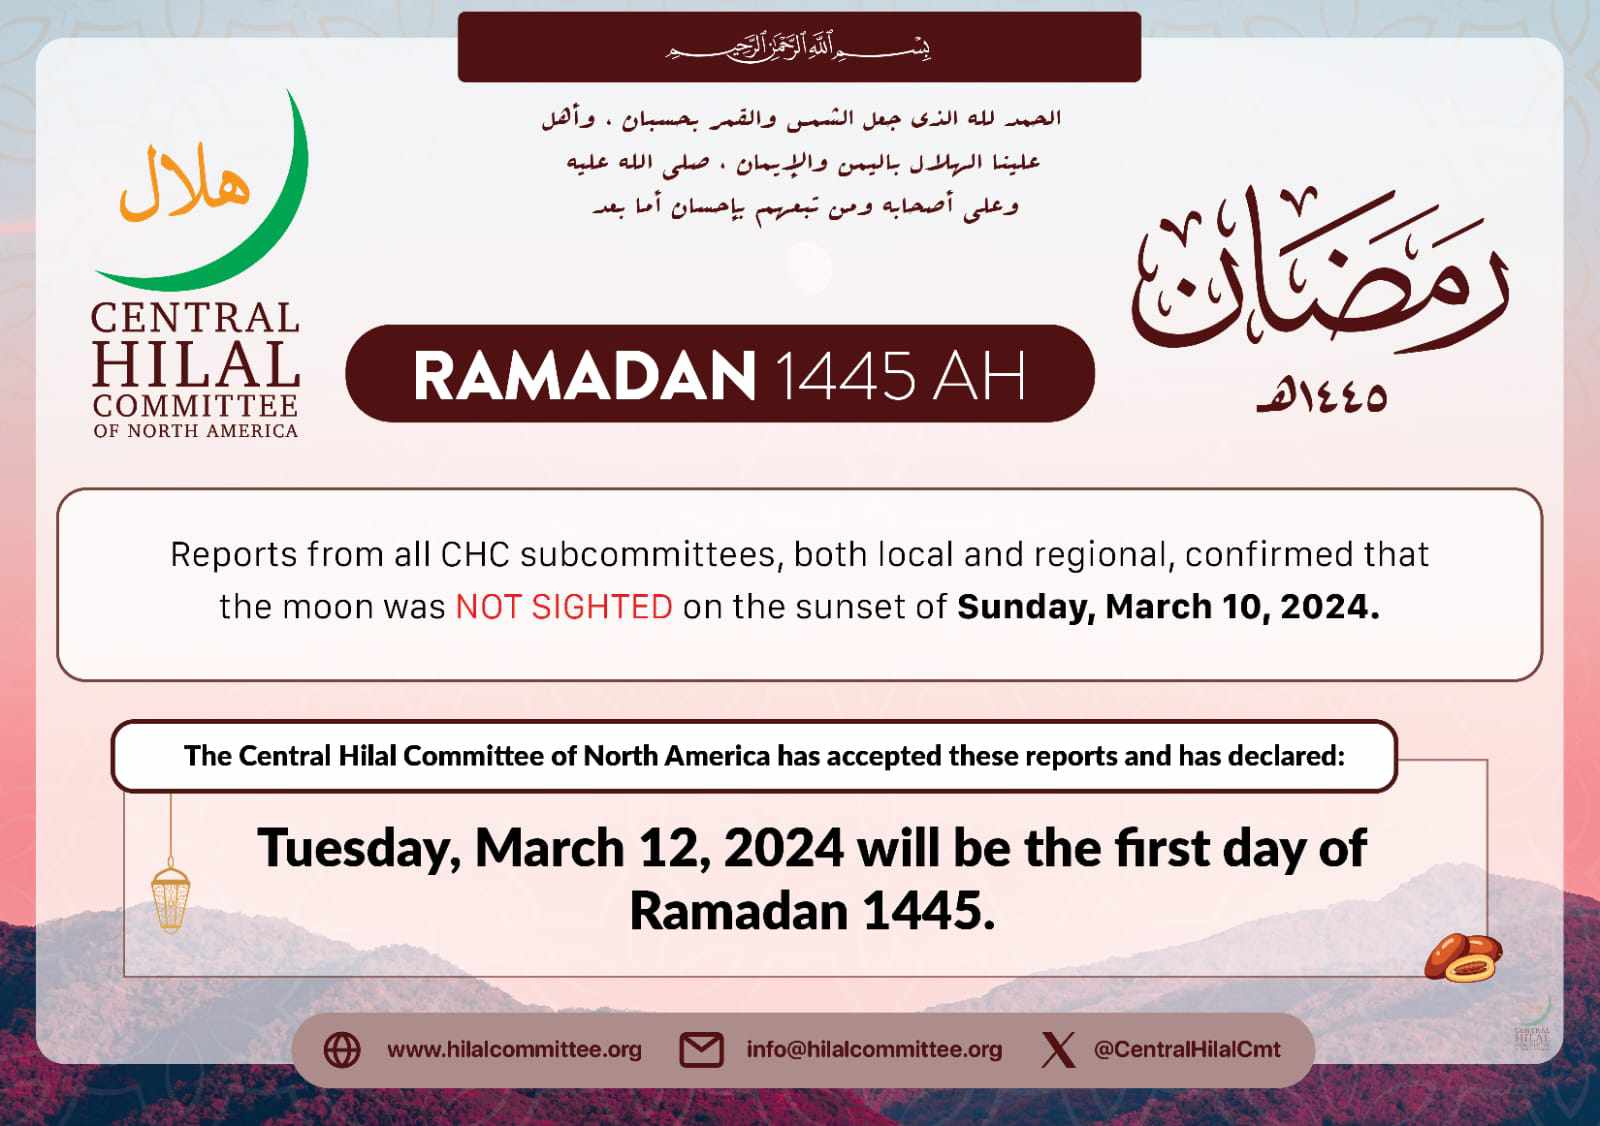 Central Hilal Committee Ramadan Calendar 2024